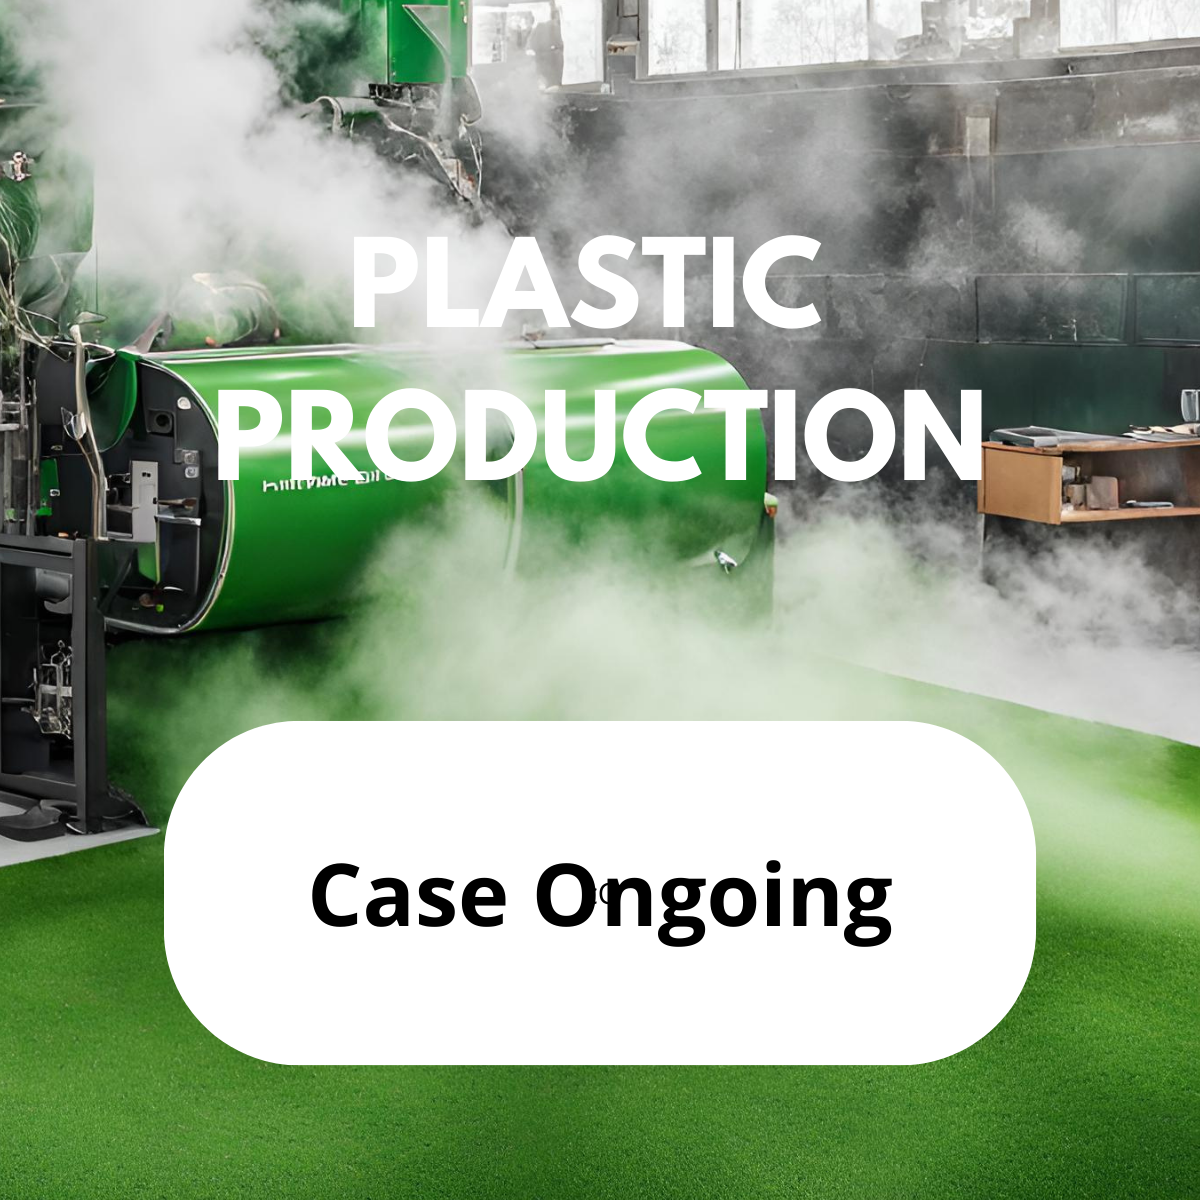 Plastic Production